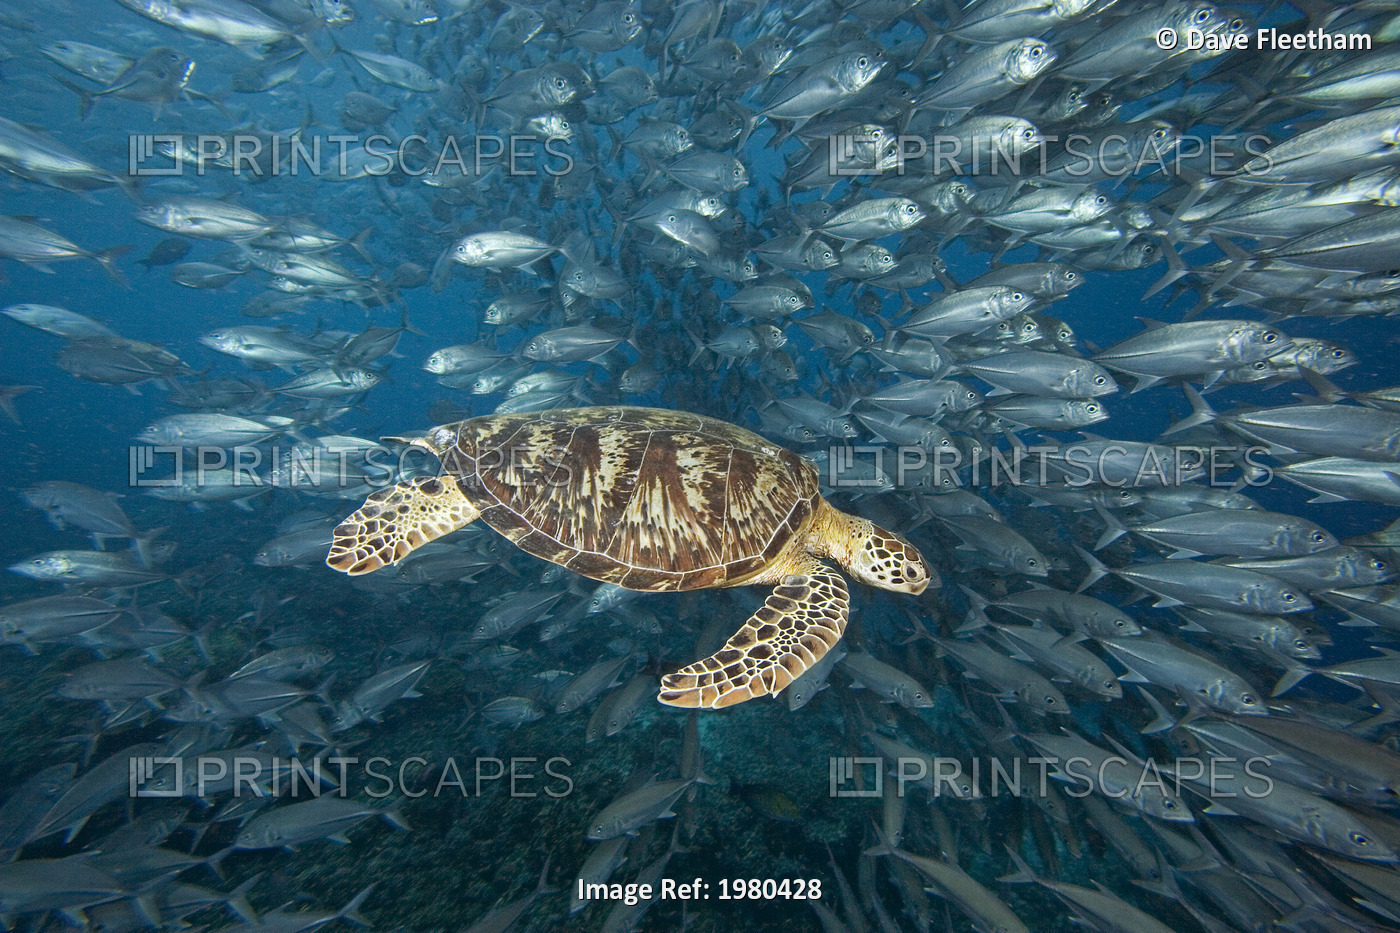 Malaysia, Green Sea Turtle (Chelonia Mydas) with school of fish; Sipidan